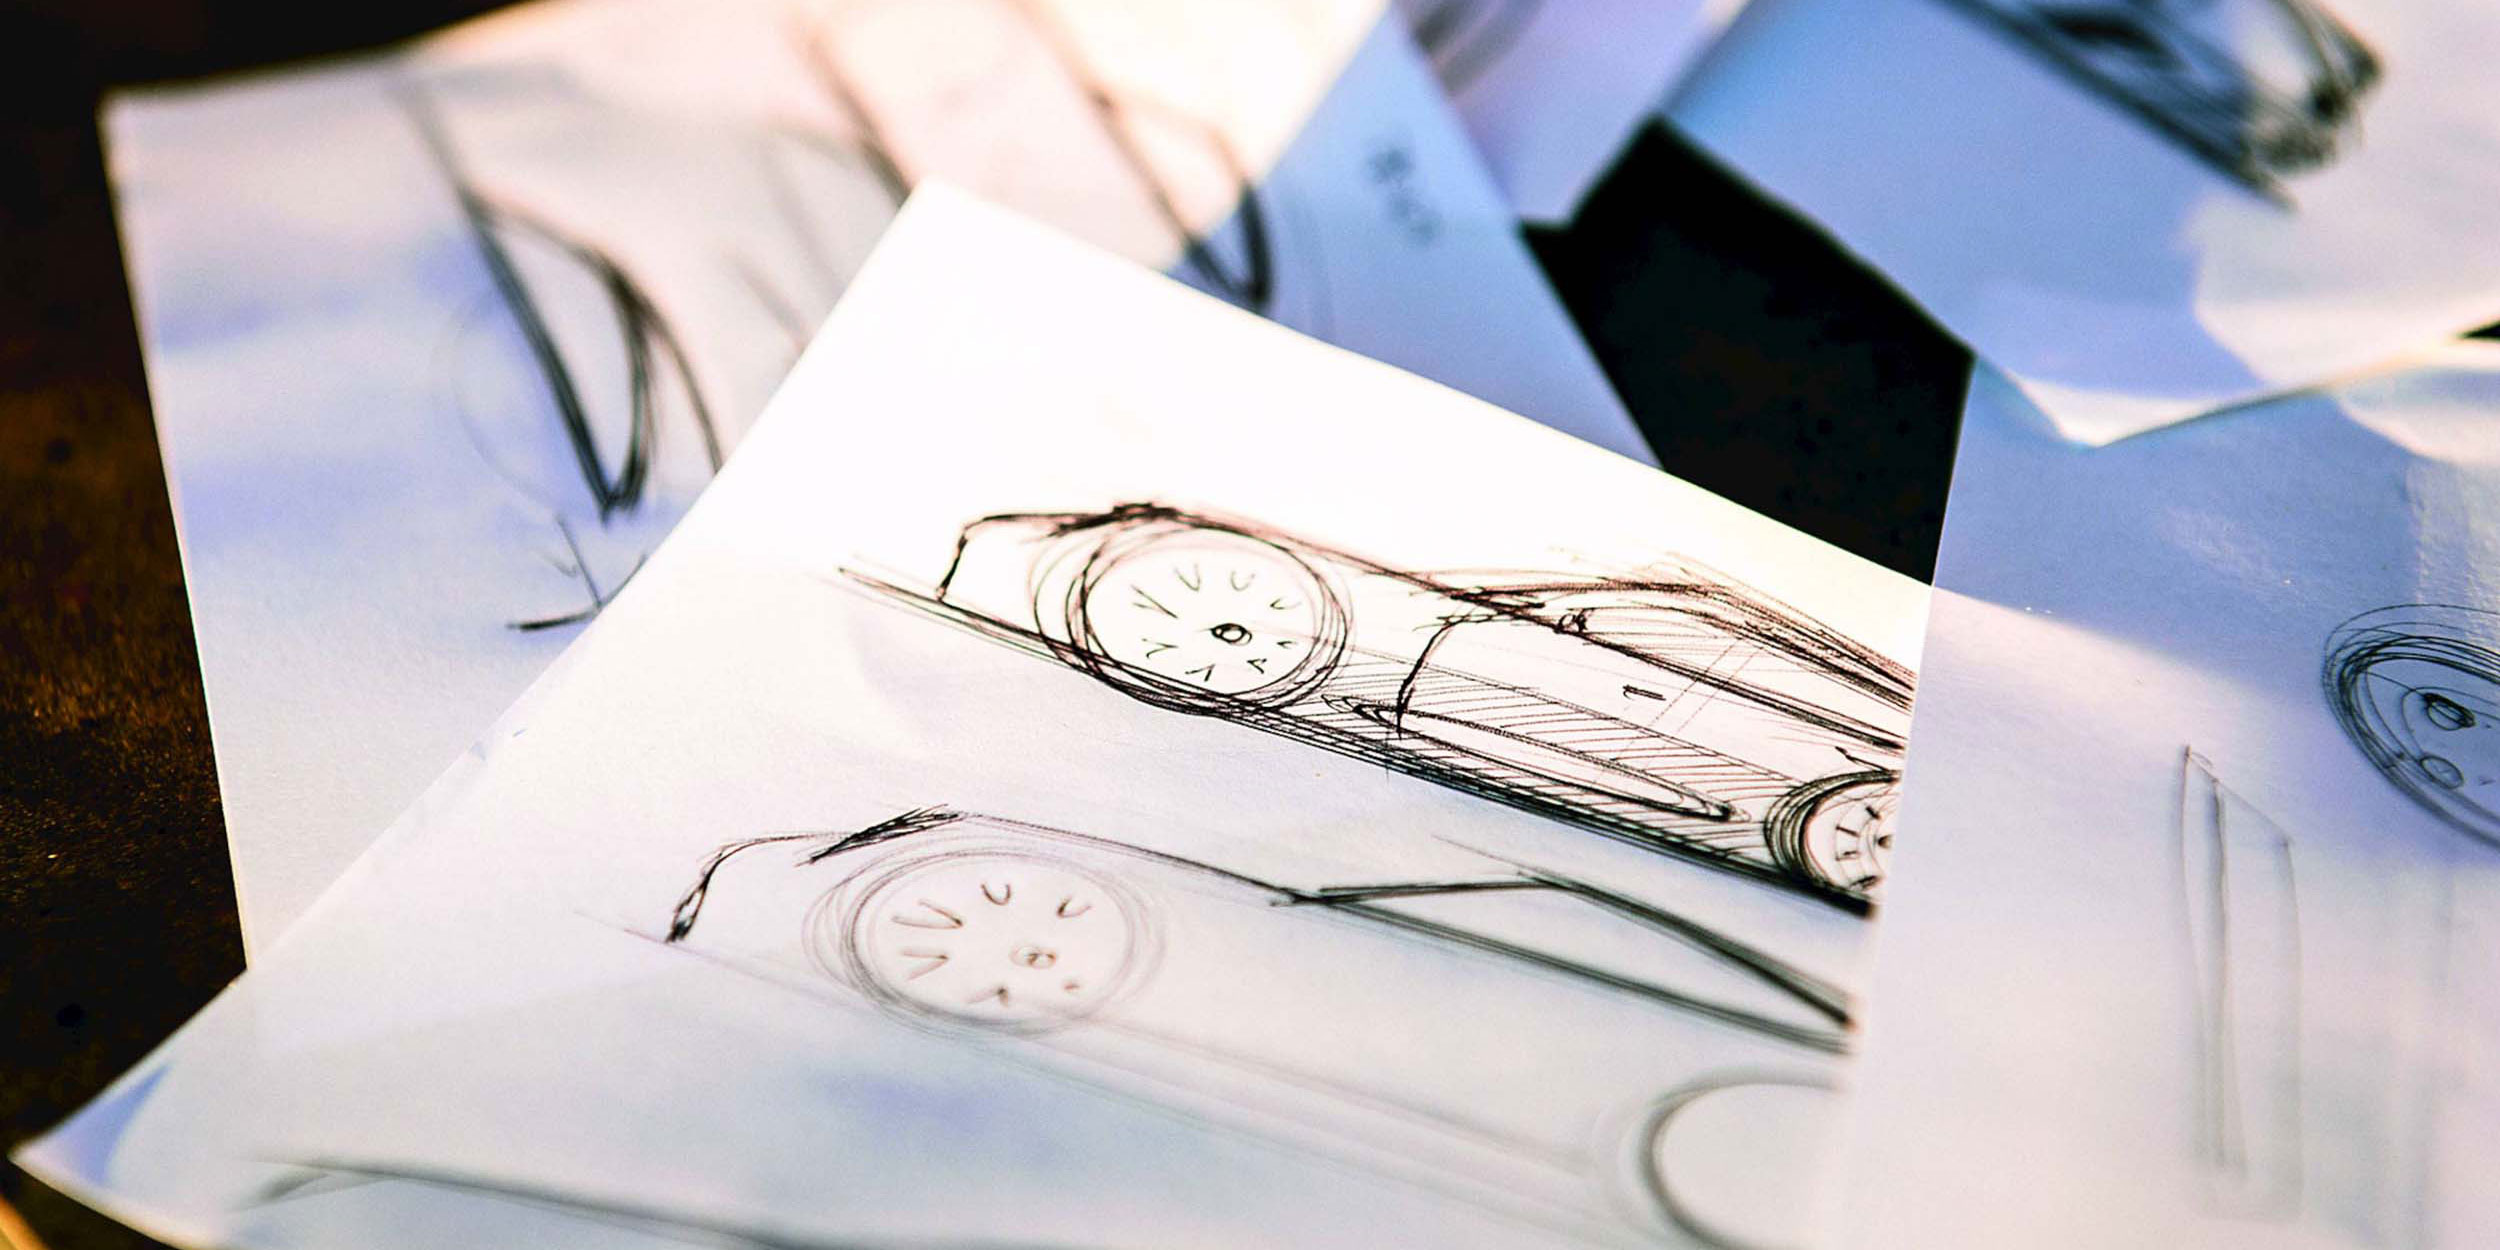 “Porsche Unseen” provides a glimpse of unreleased concept cars